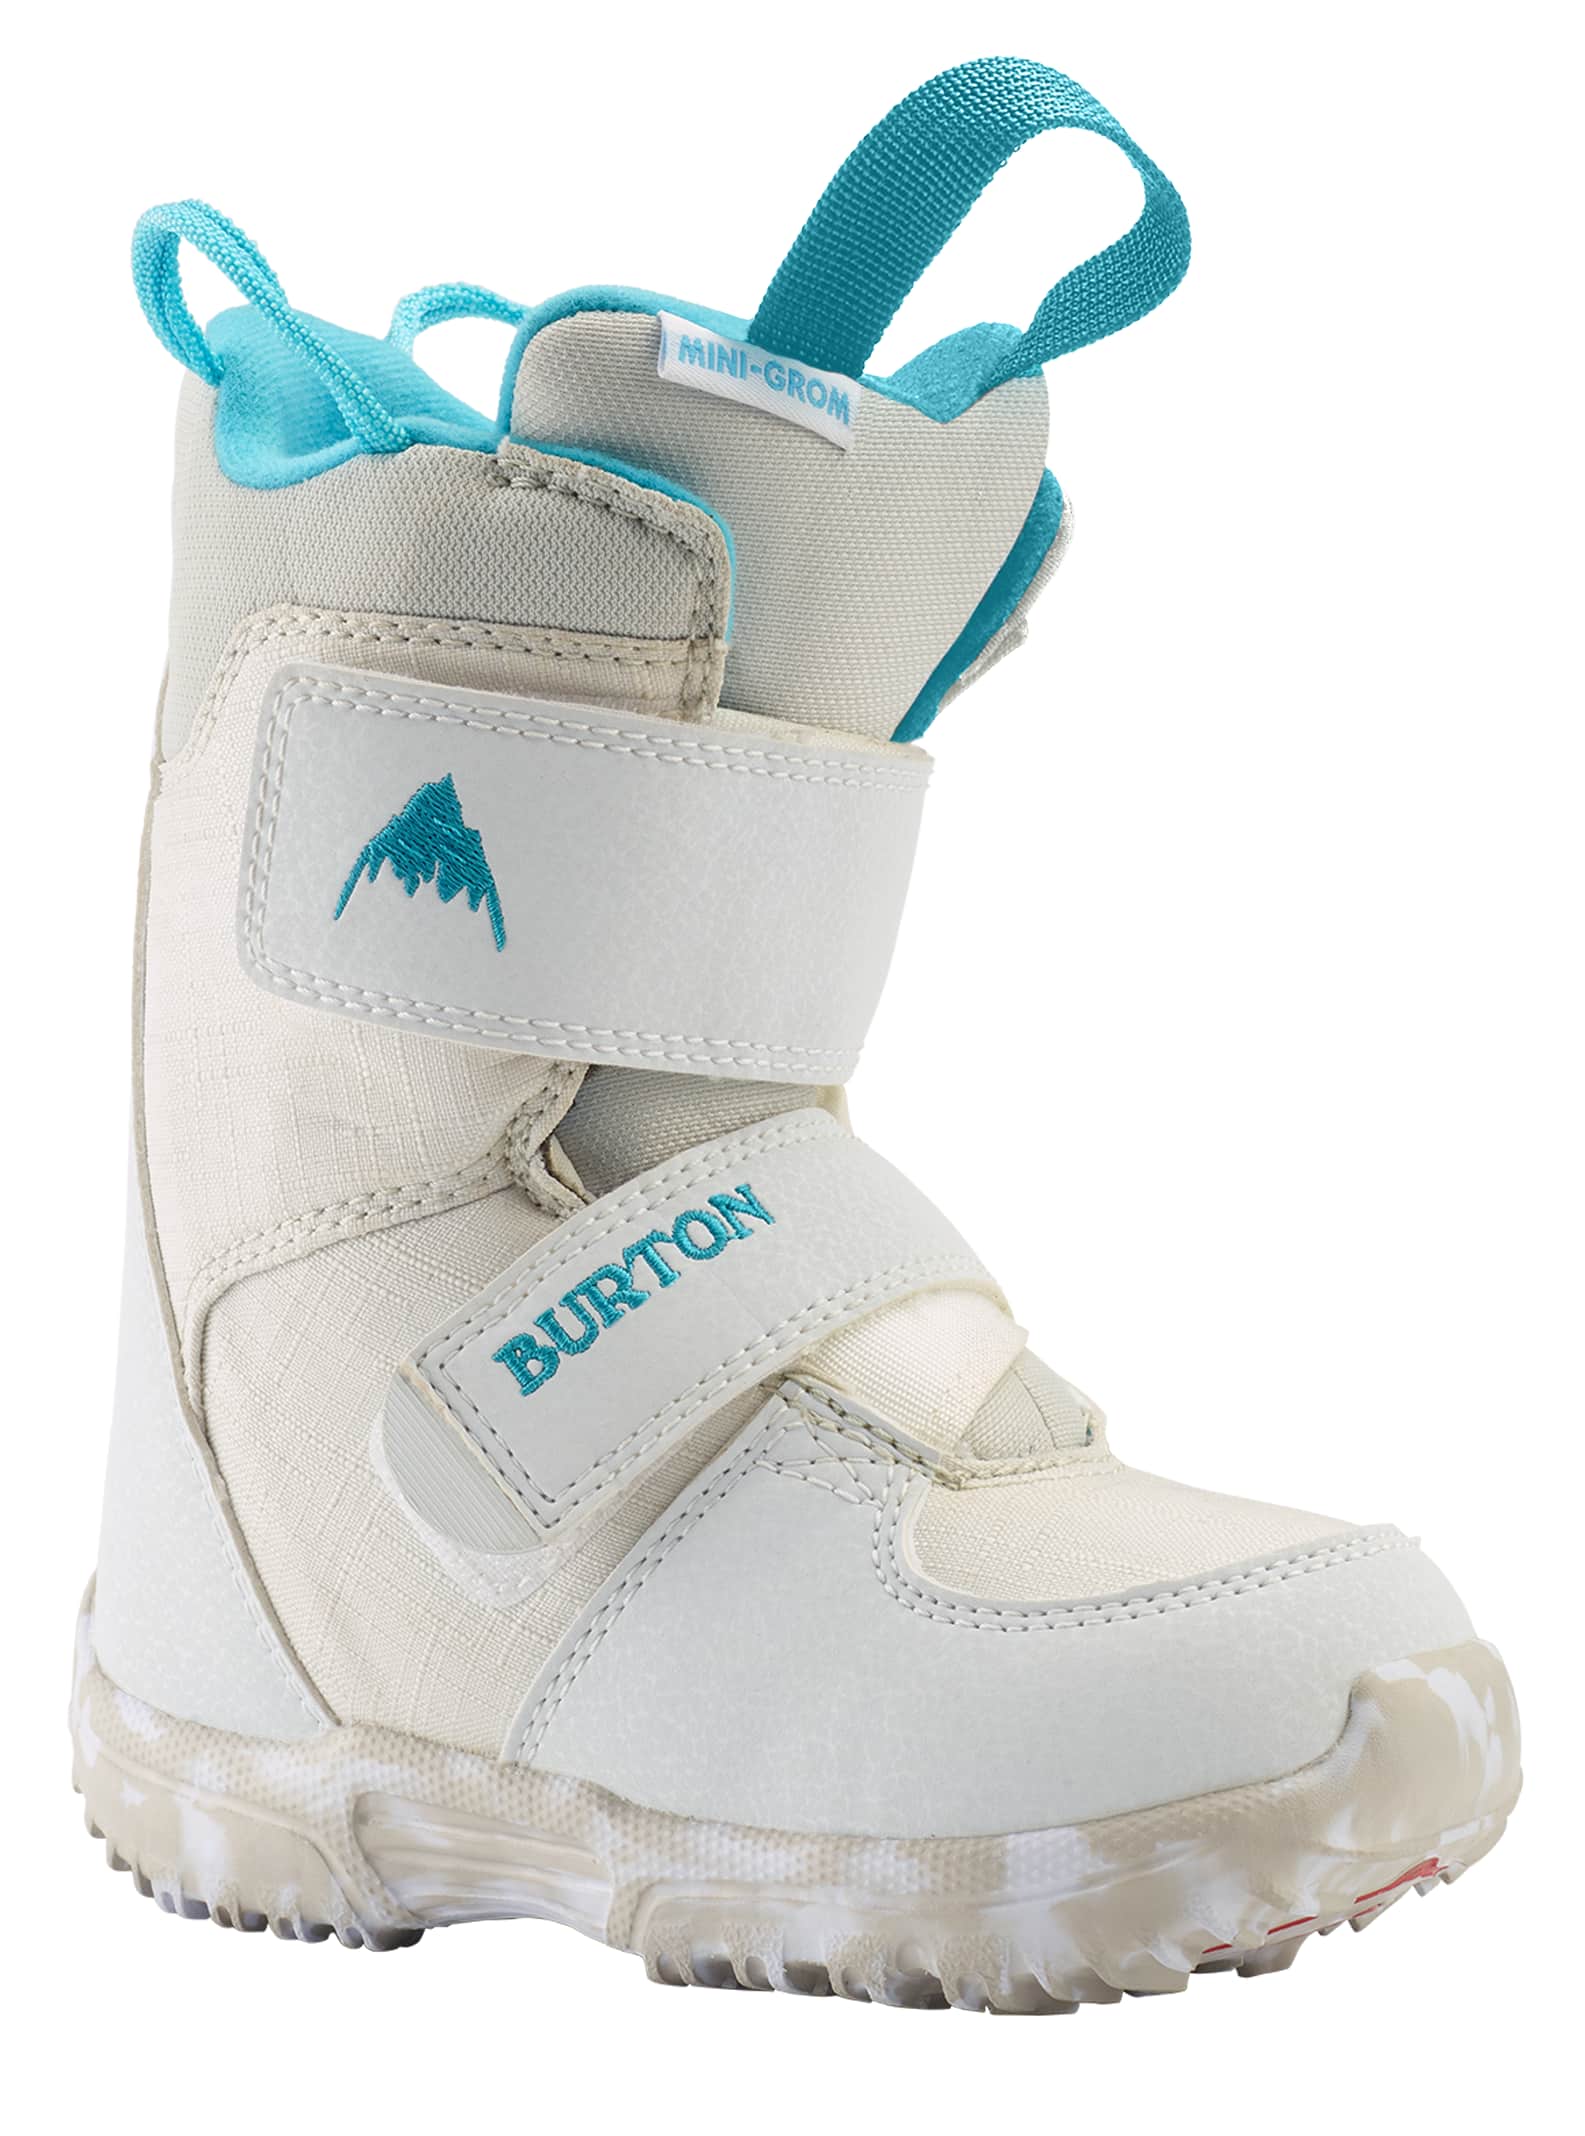 Toddlers' Burton Mini Grom Snowboard Boot | Burton.com Winter 2022 US